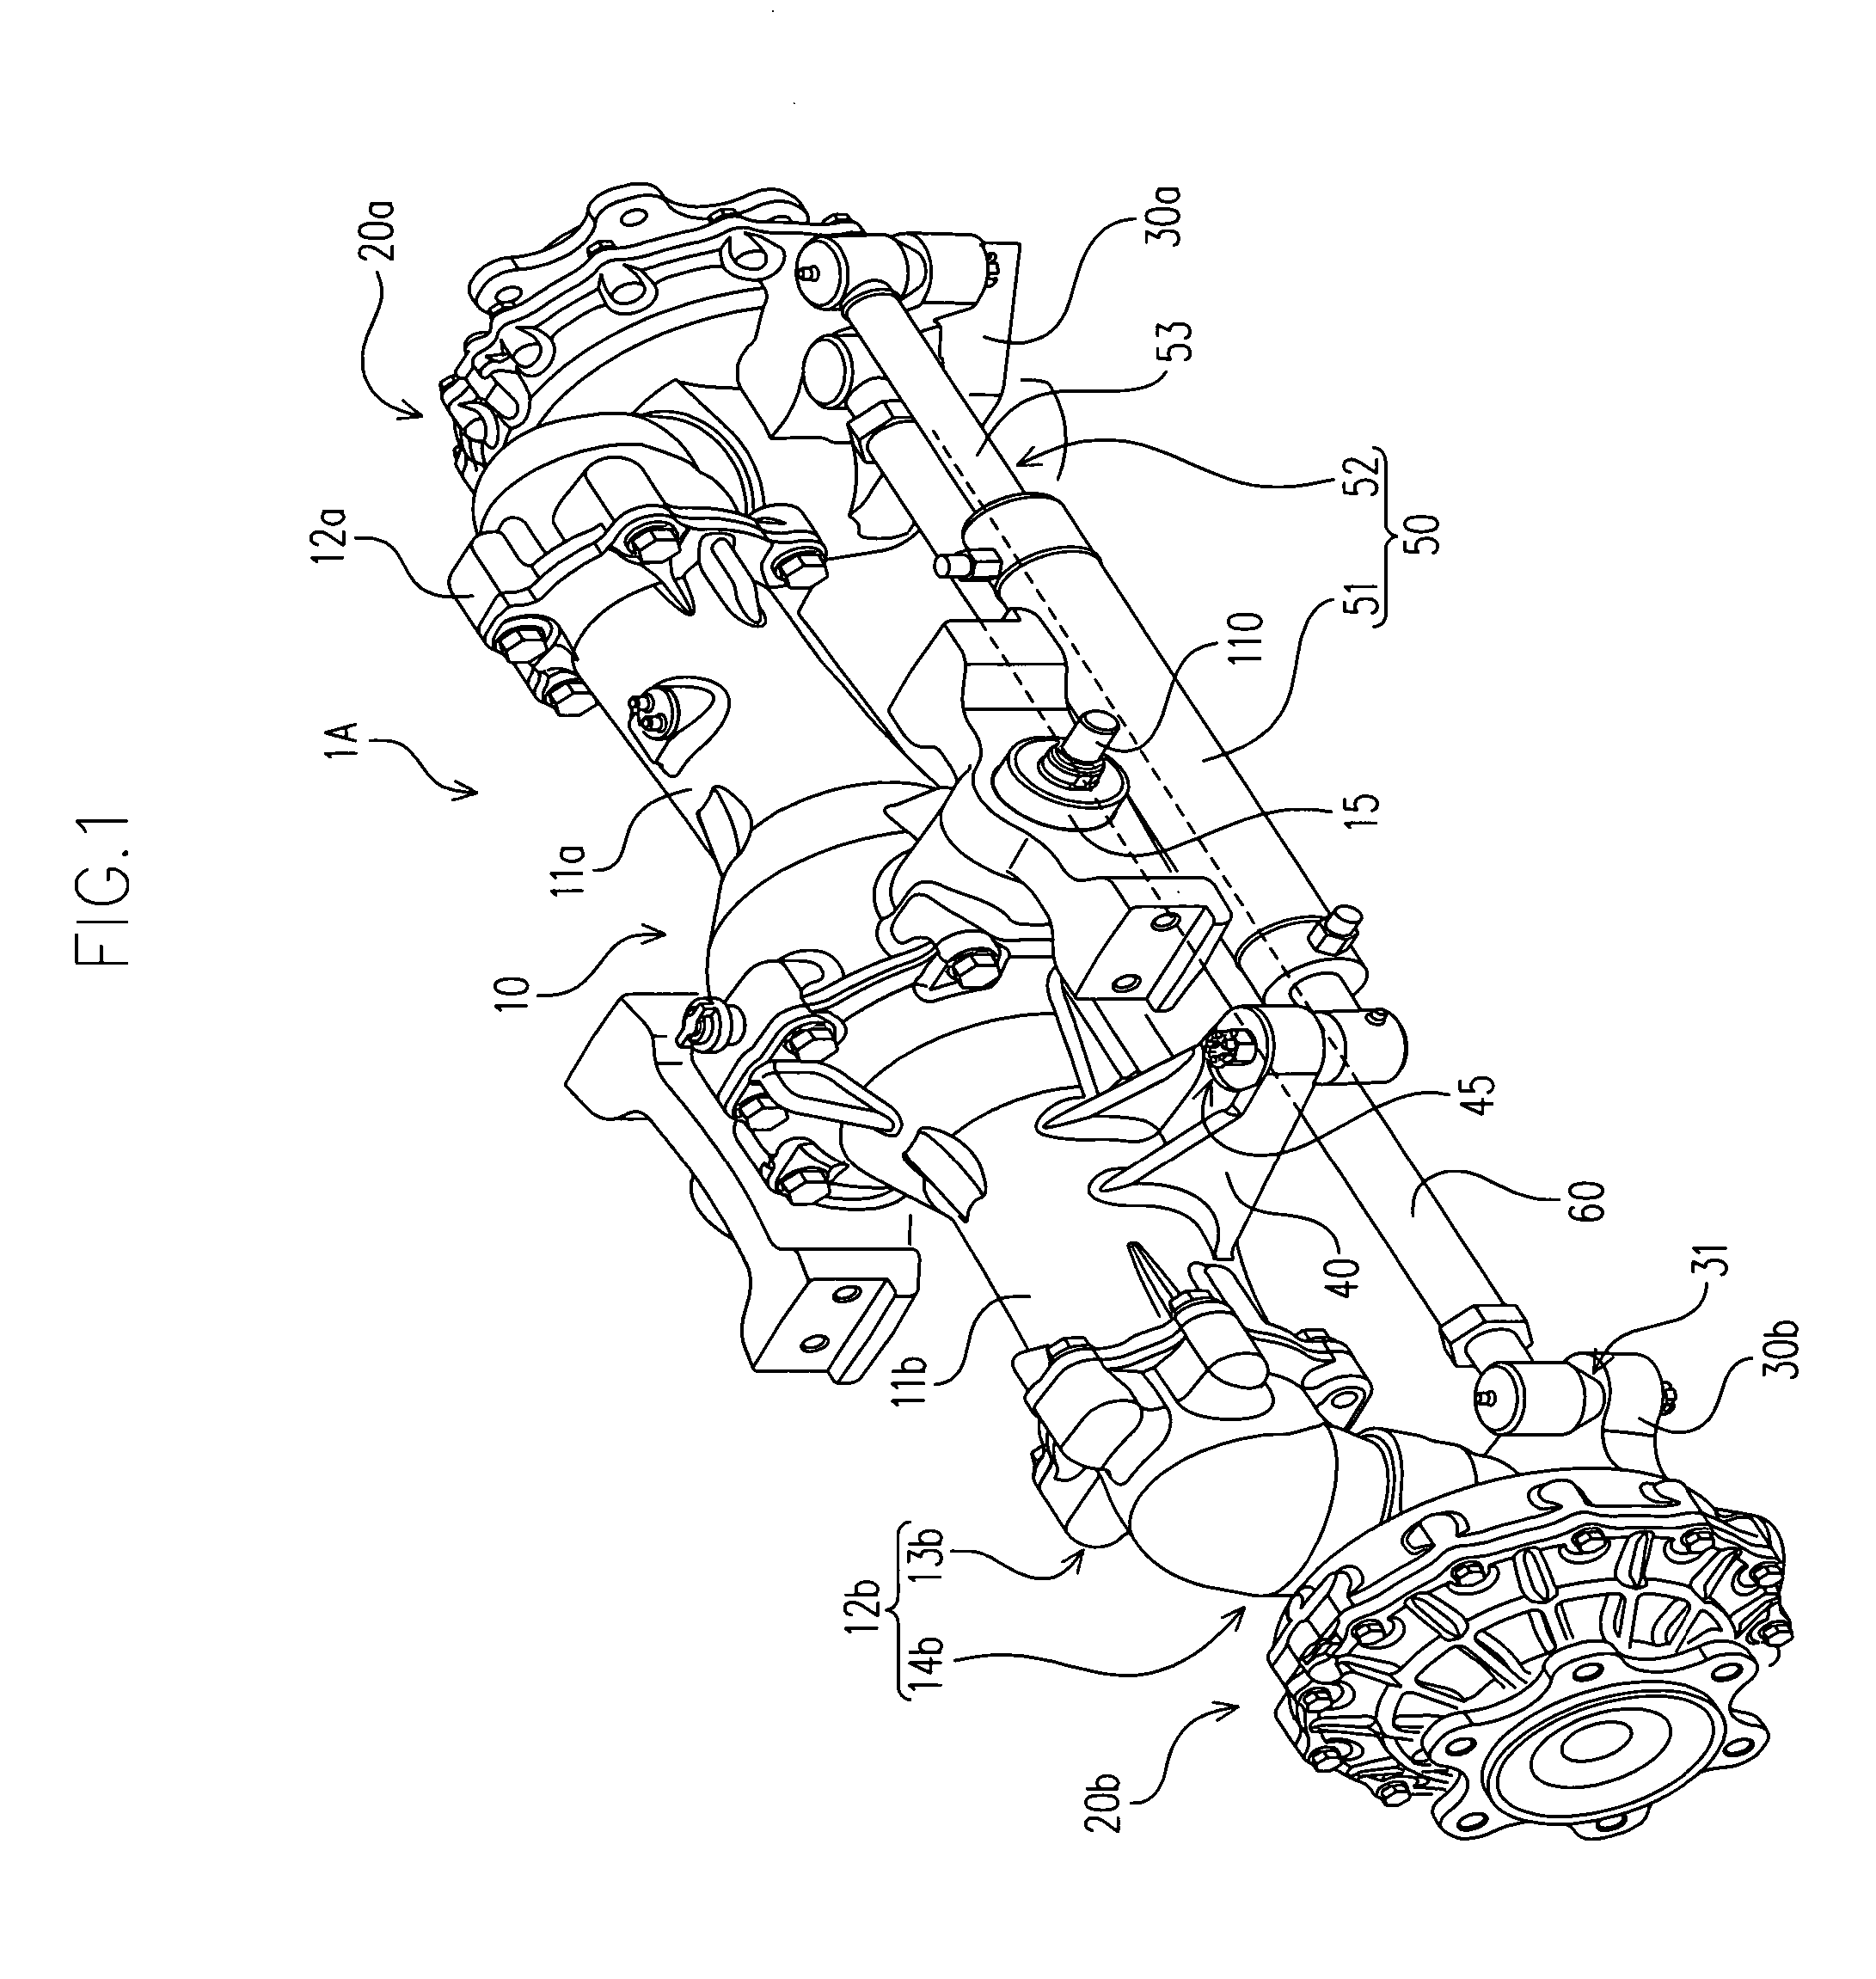 Hydraulic steering mechanism and driving-steering-wheel support mechanism